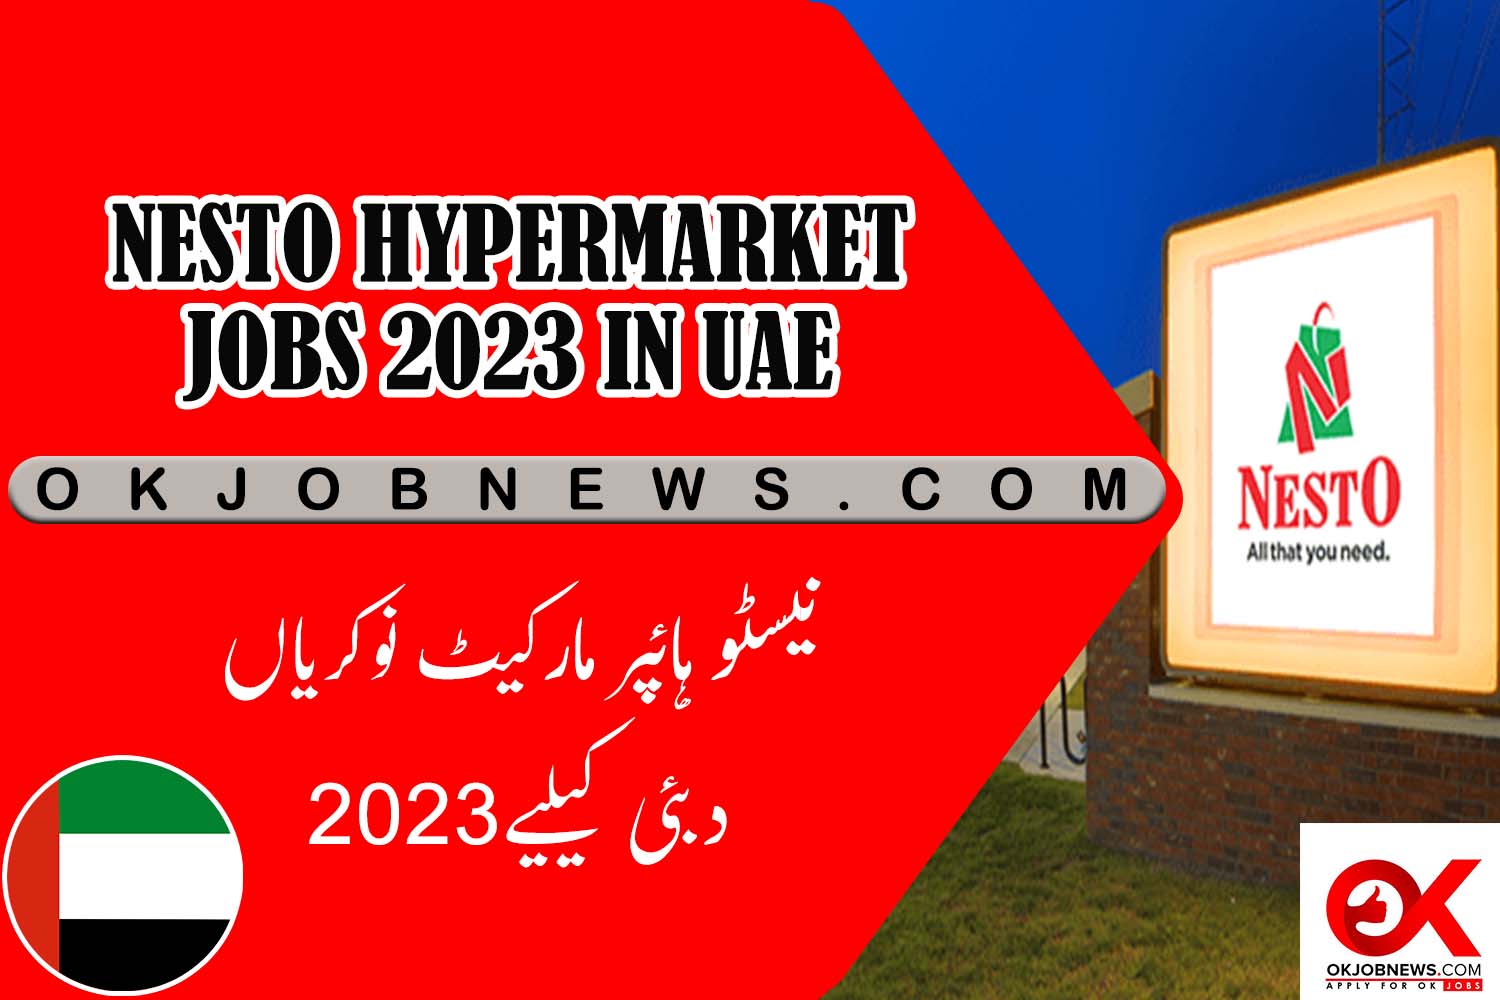 NESTO HYPERMARKET JOBS 2023 IN UAE